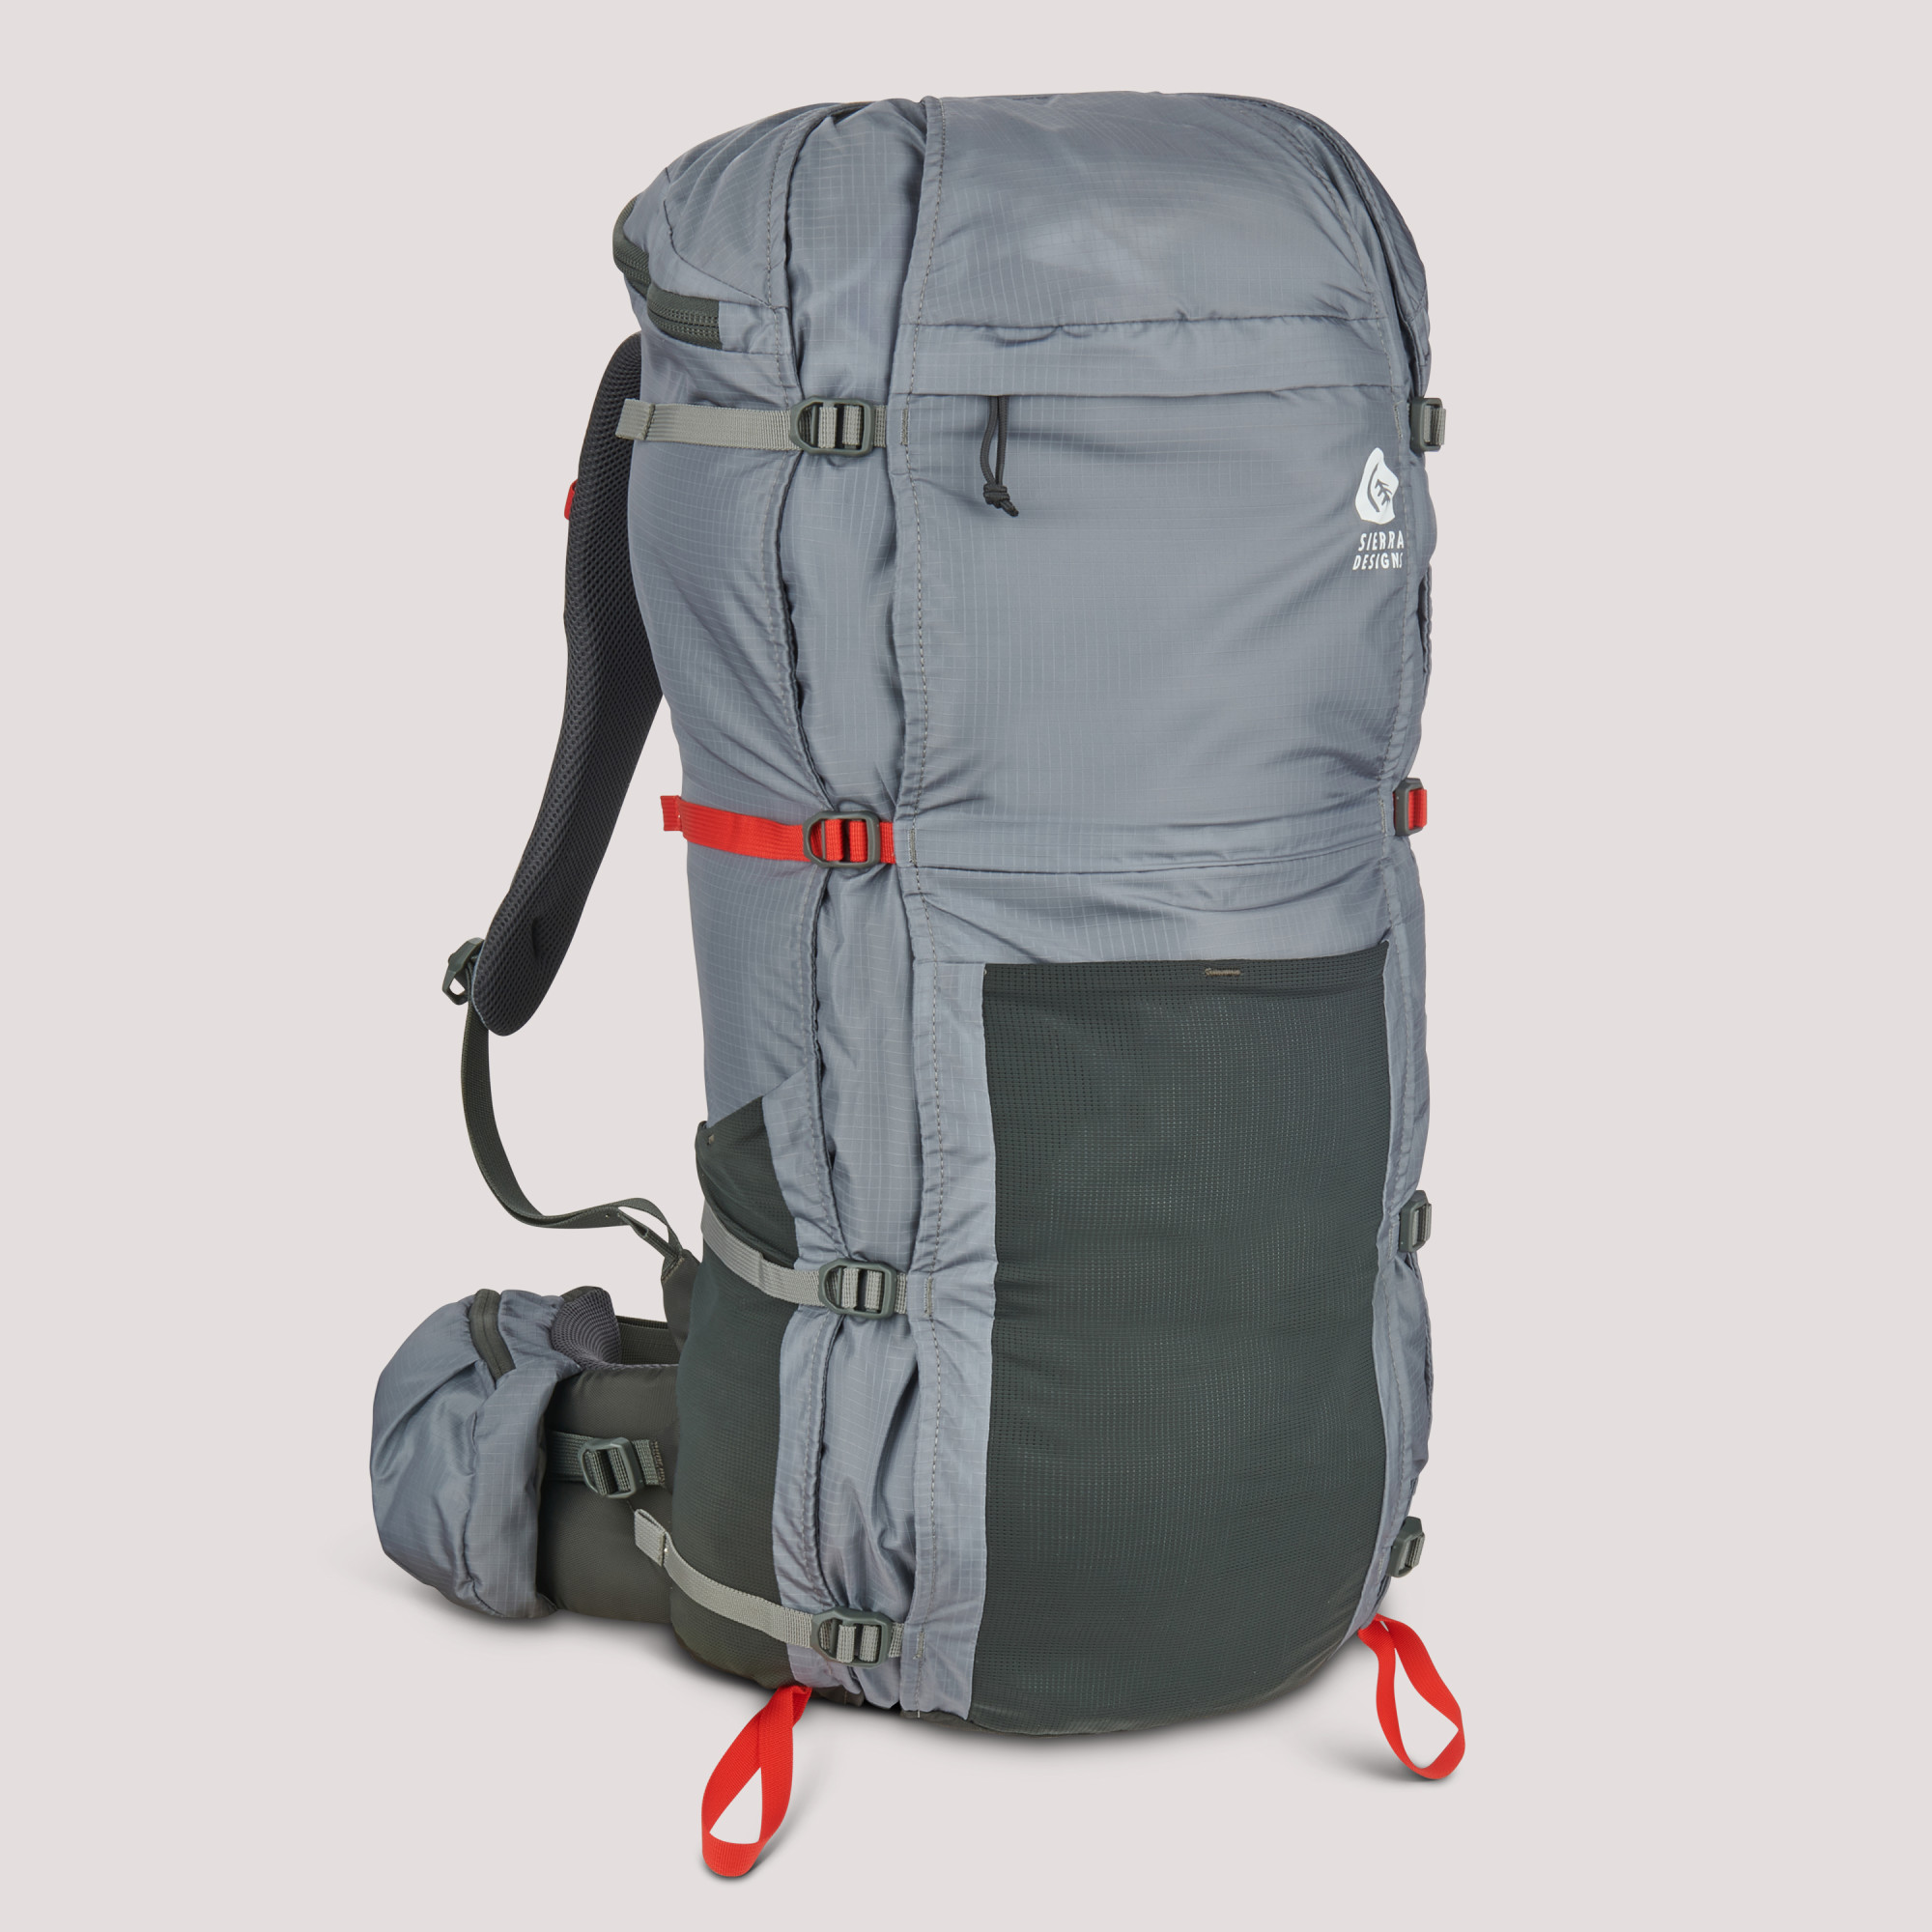 Sierra Designs Flex Trail 40-60 backpack, compacted